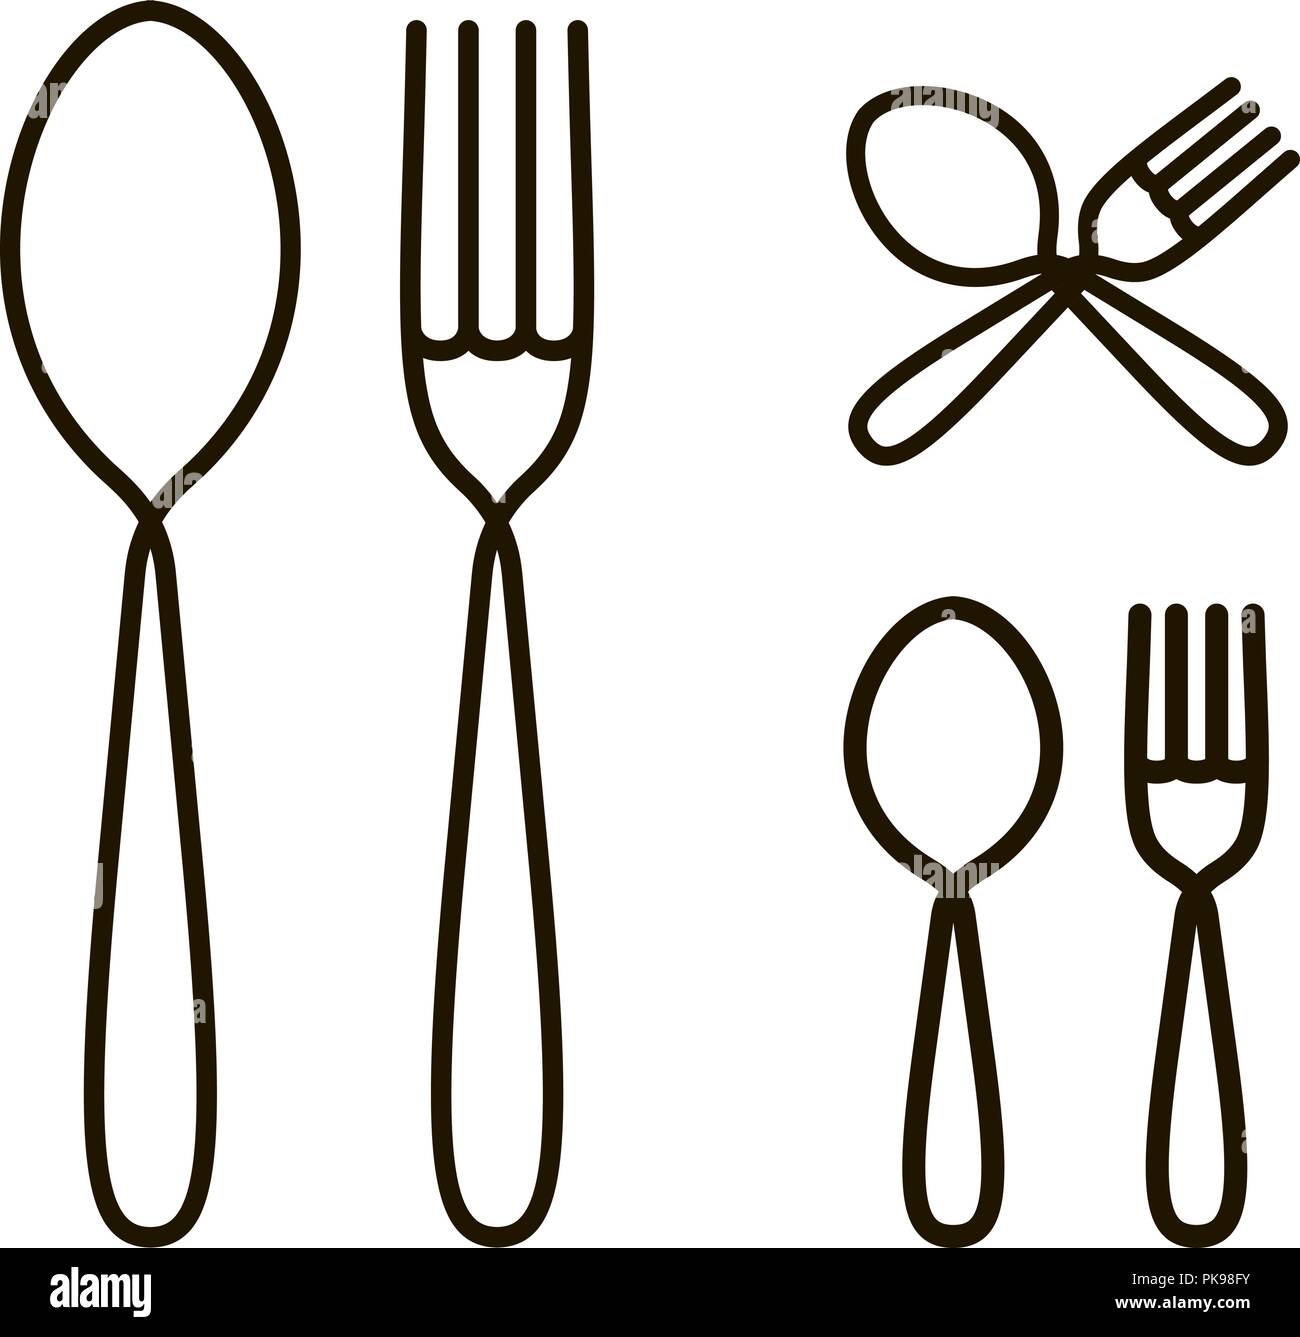 Spoon and fork icon or logo. Restaurant menu symbol. Vector Stock Vector